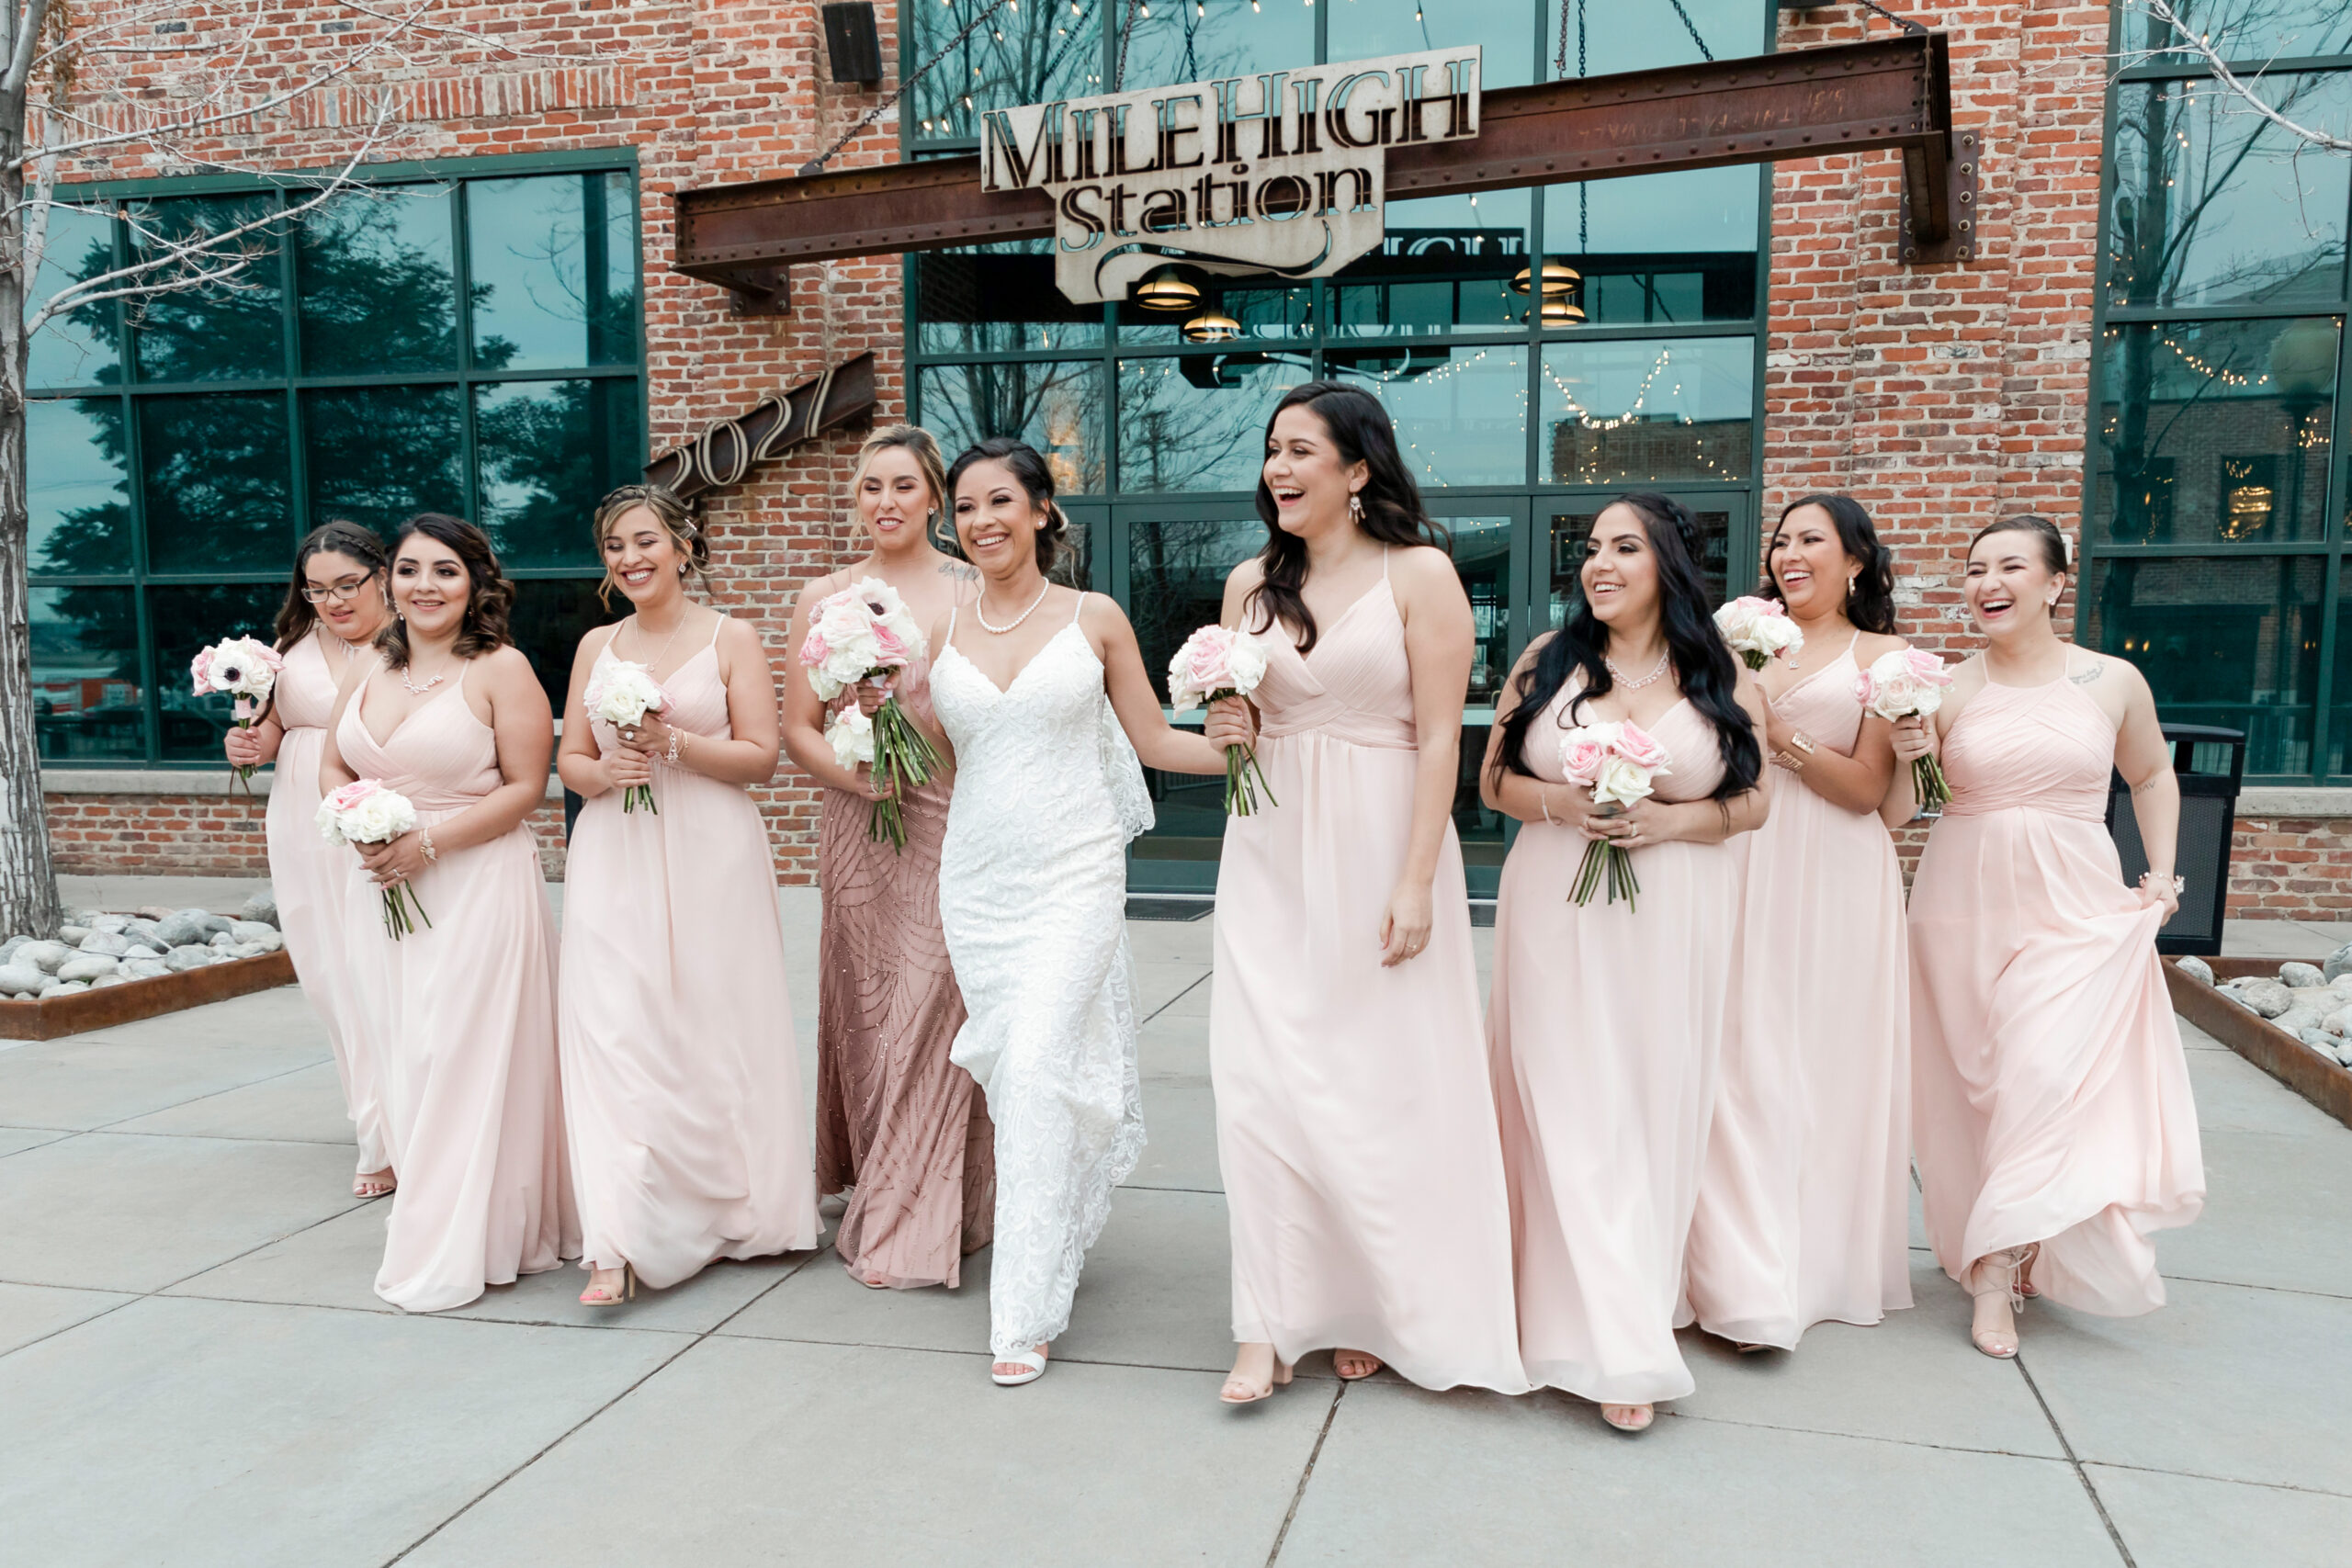 A bride walks with her bridesmaids for wedding party photos.